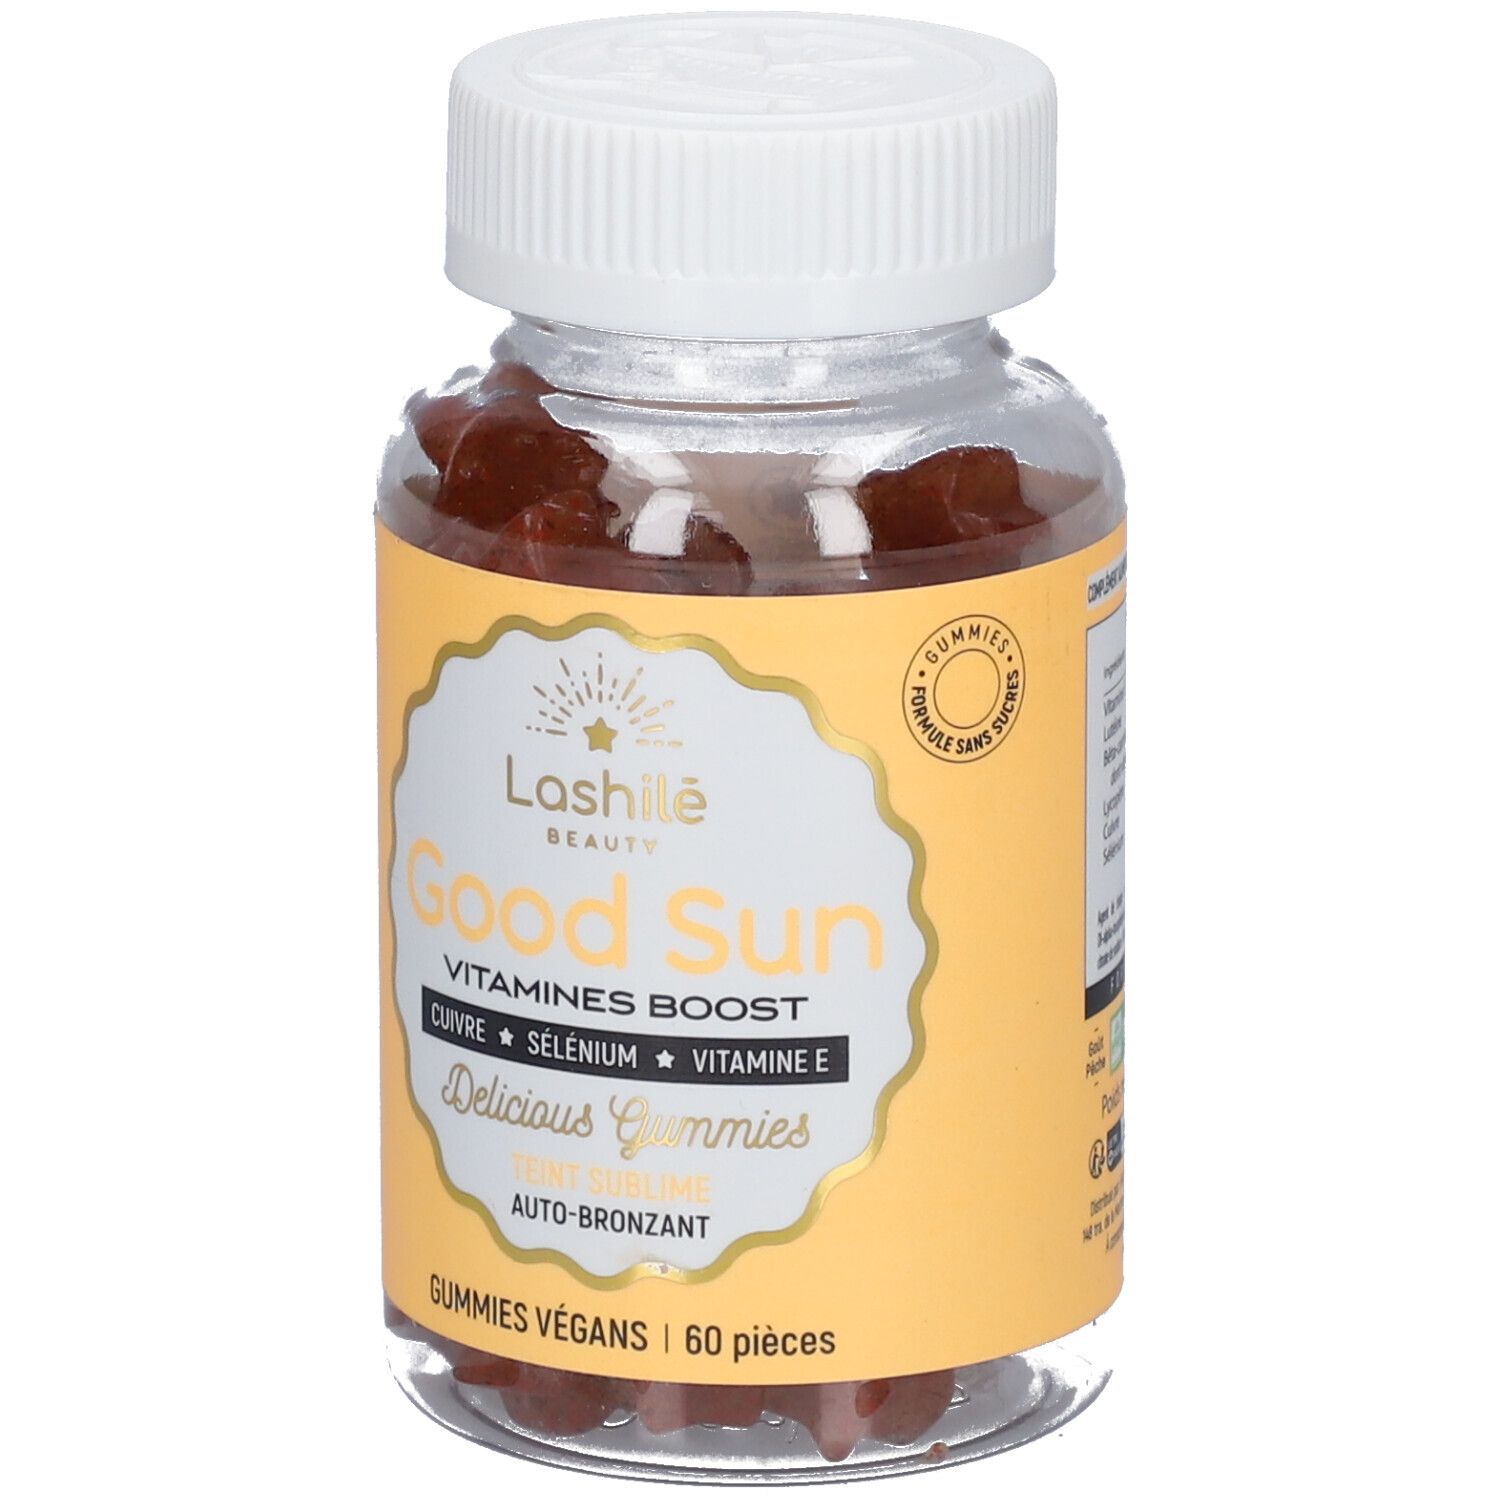 Lashilé Beauty Gute Sonne Vitamine Auto-Bronzant S/S Gummies